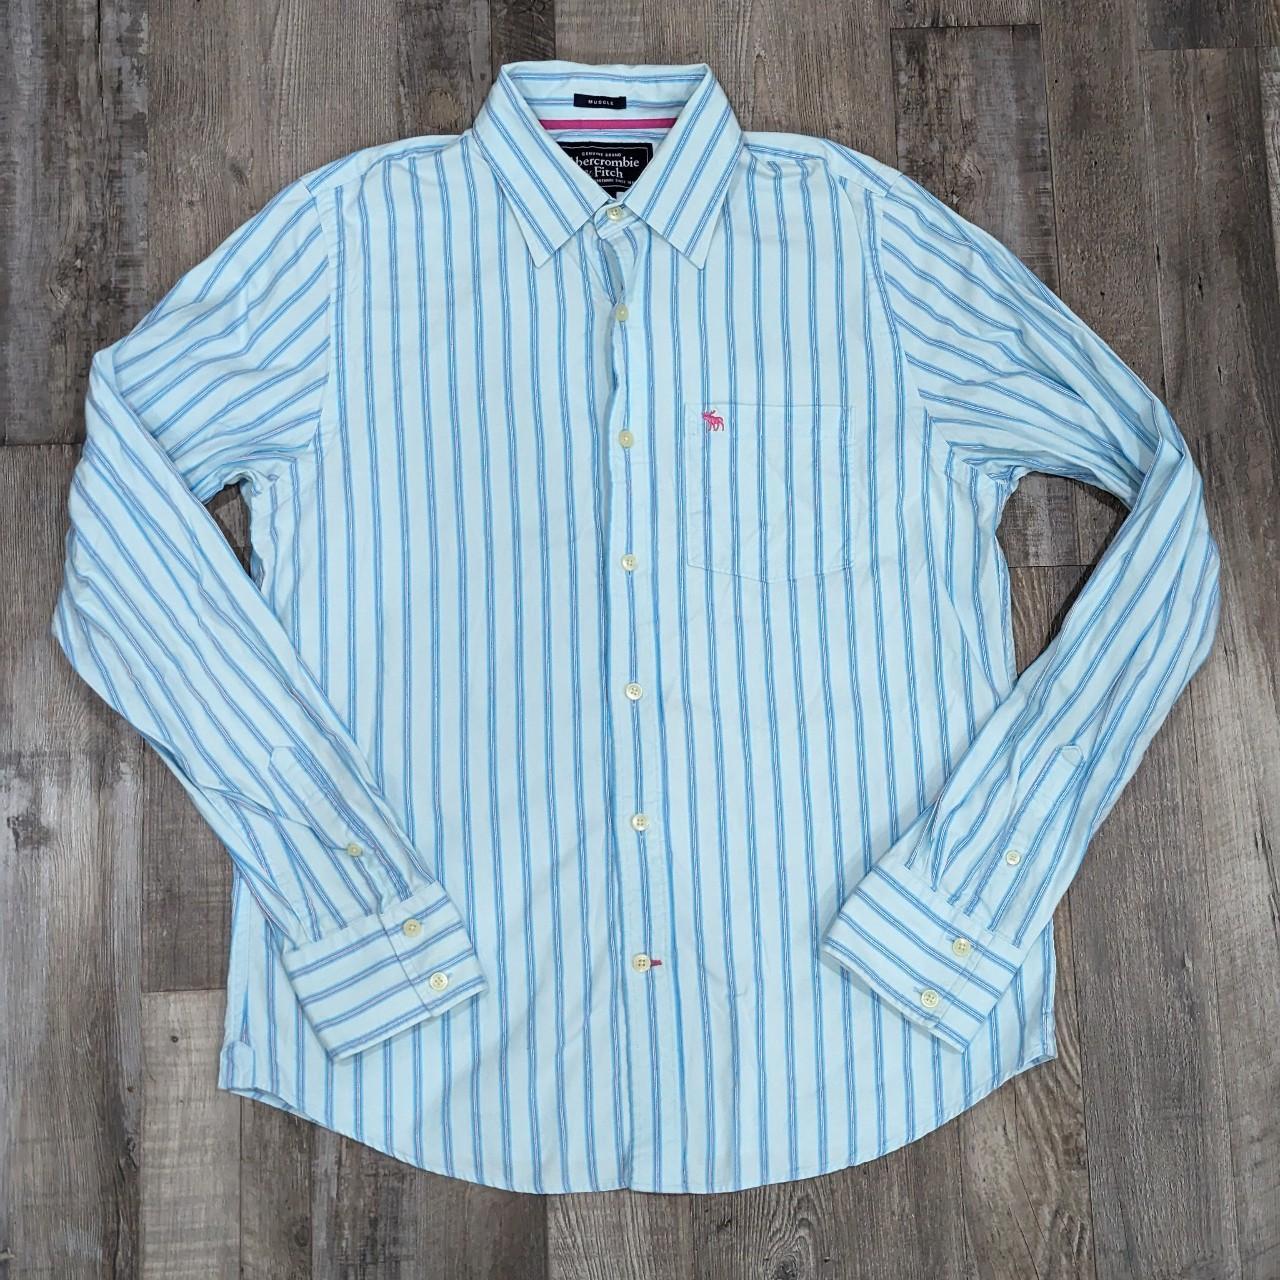 Hollister Men's Size Large White Blue Striped Long Sleeve Dress Shirt